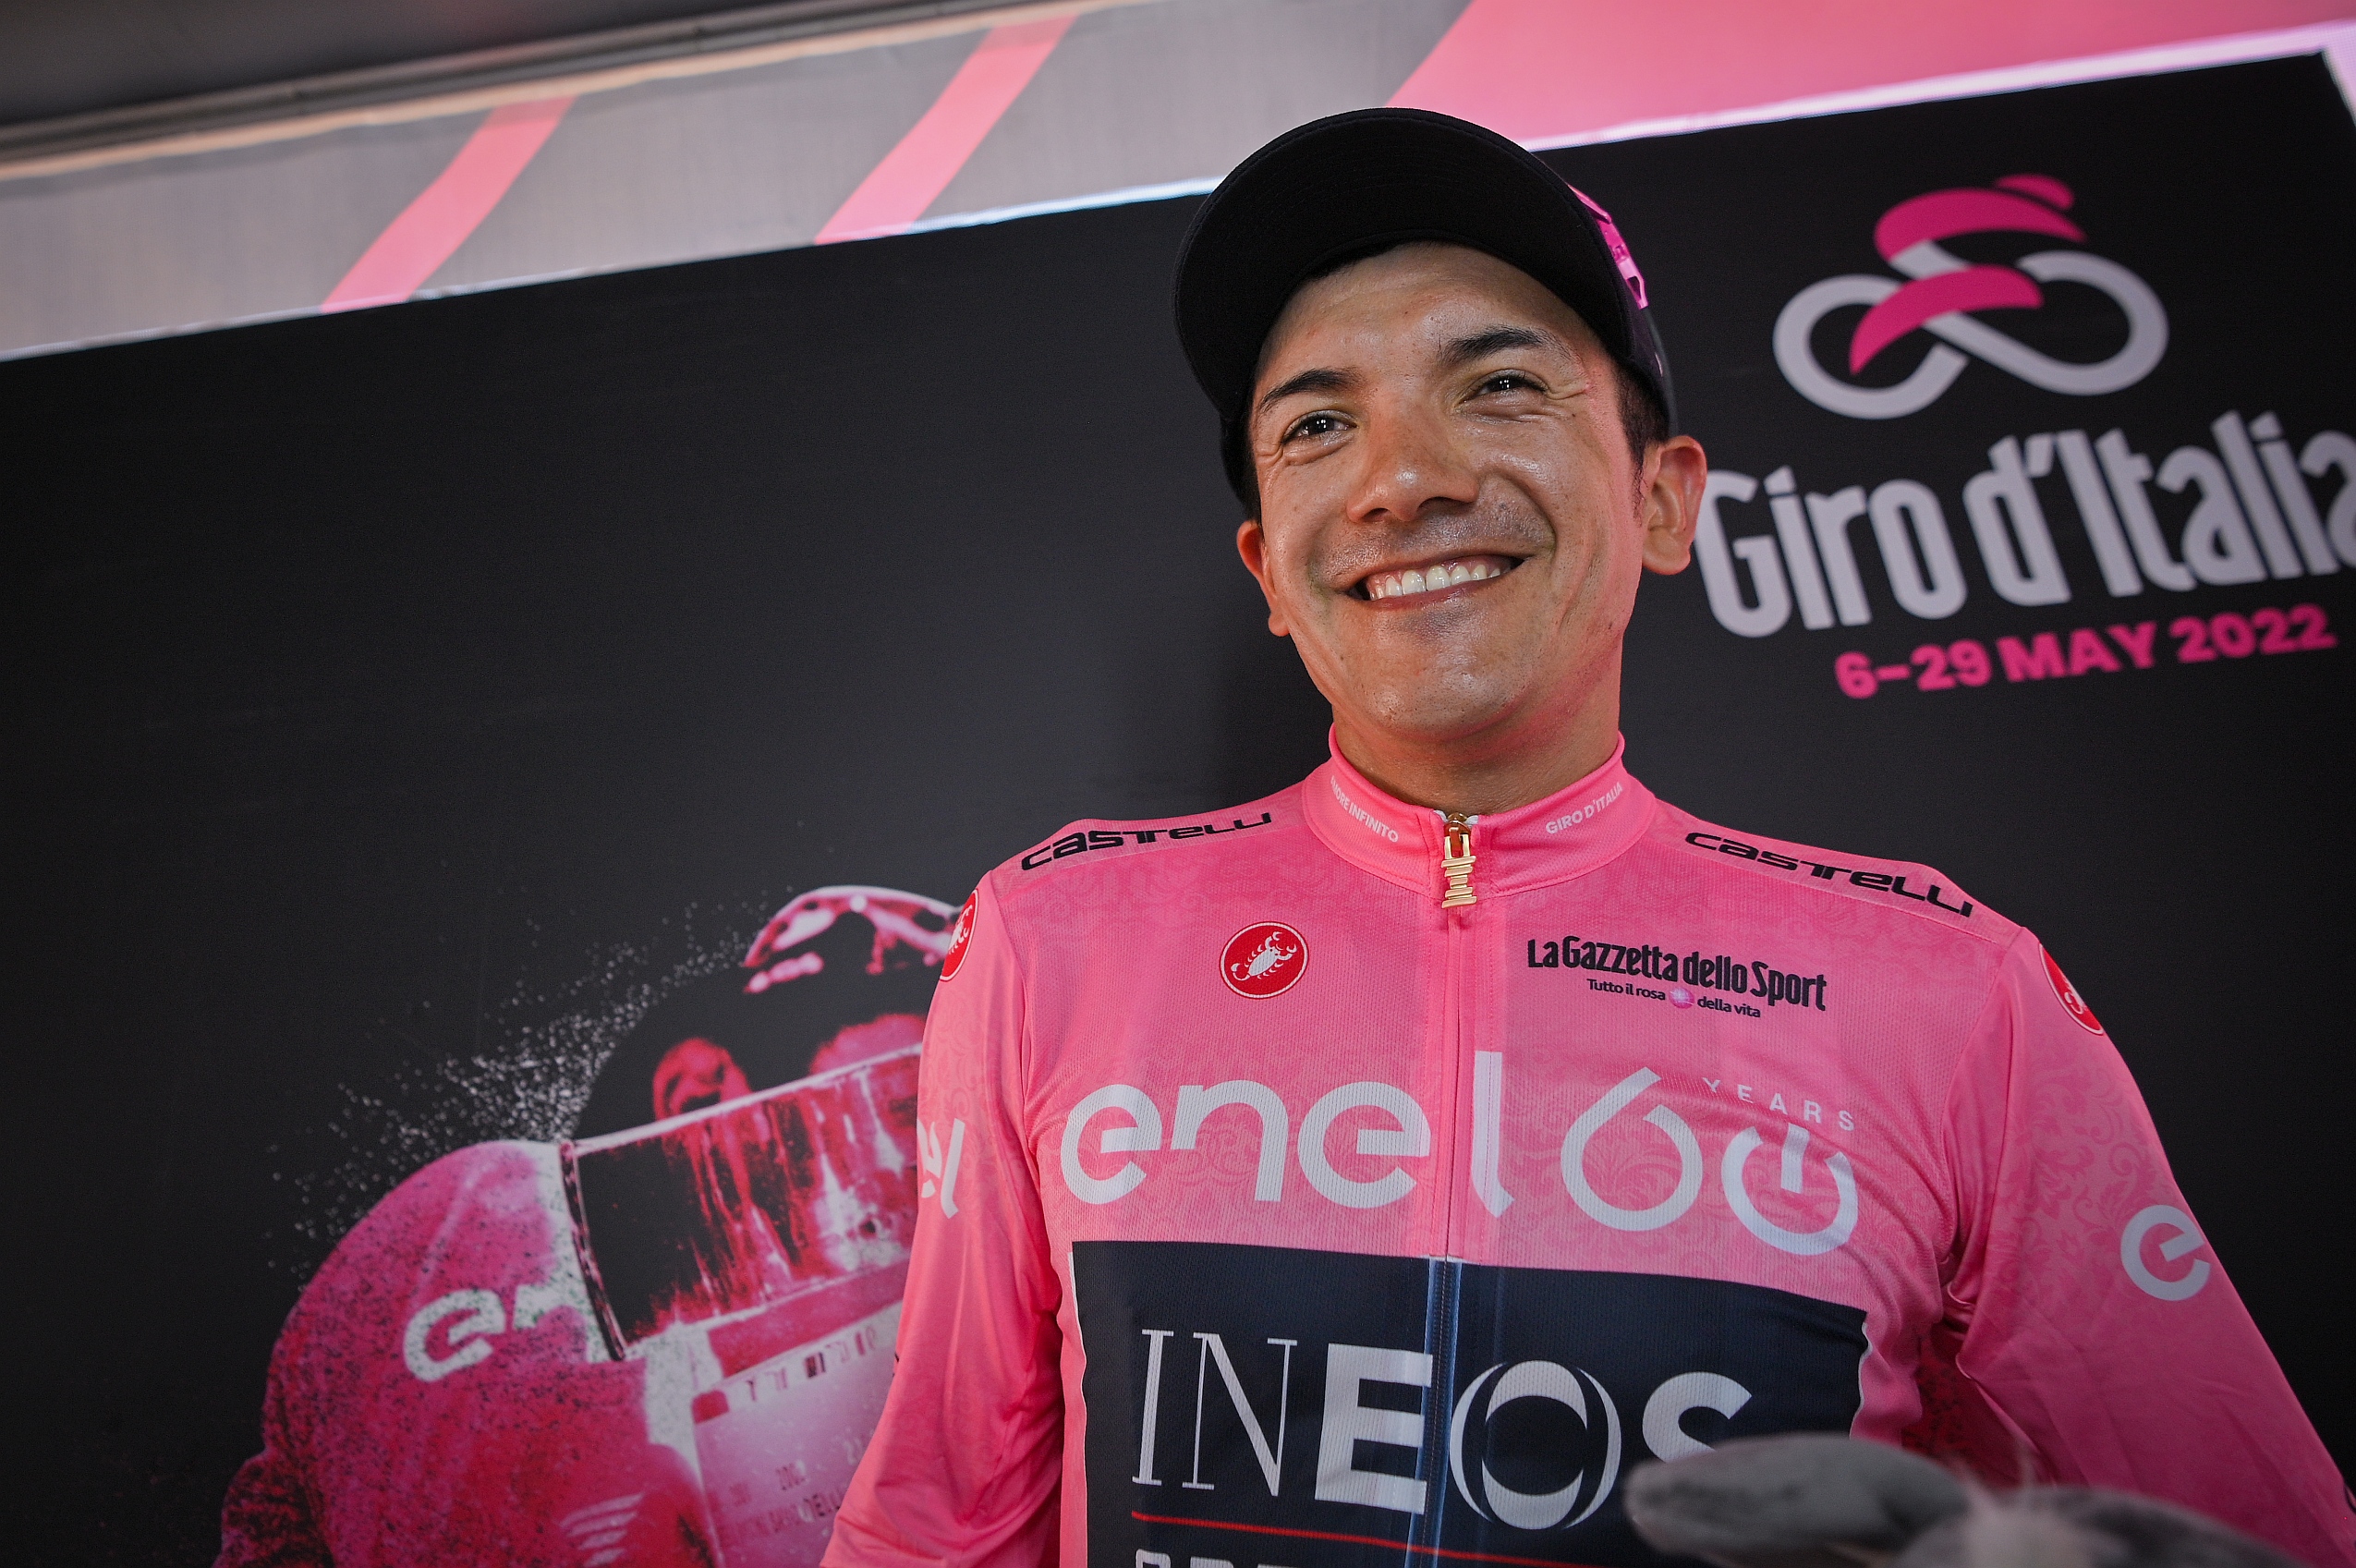 Richard Carapaz w maglia rosa podczas Giro d'Italia